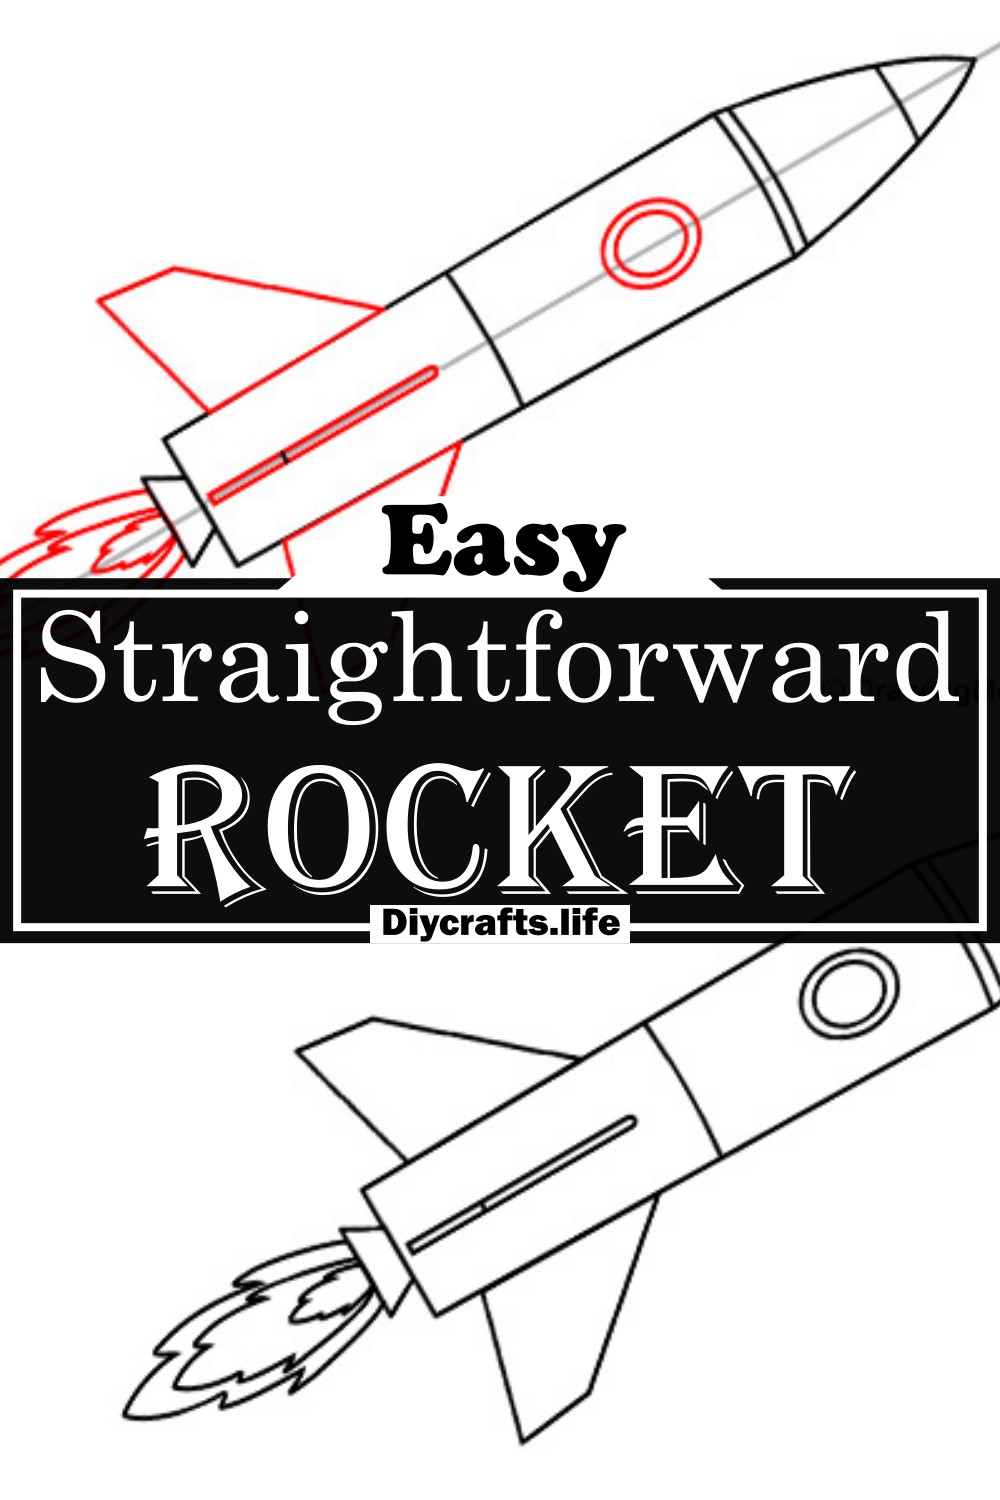 Straightforward Rocket